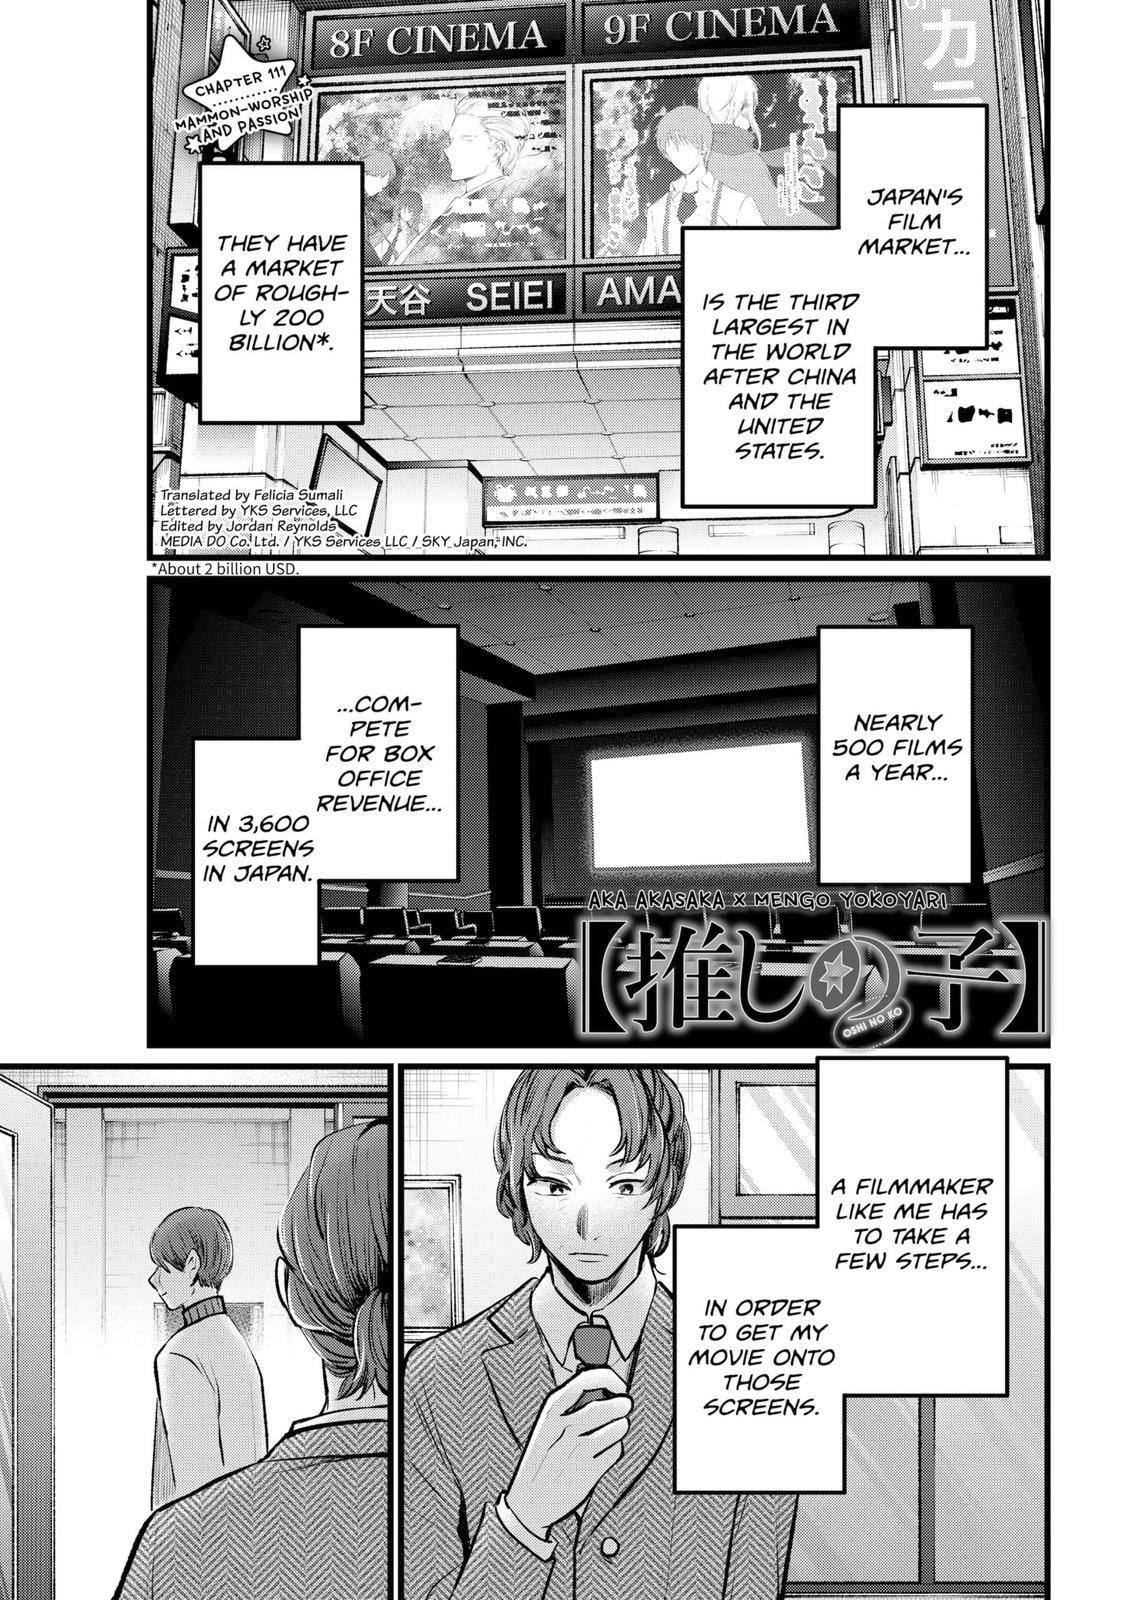 Read Saikyou Ansatsusha, Class Ten'i De Isekai E Chapter 4 on Mangakakalot